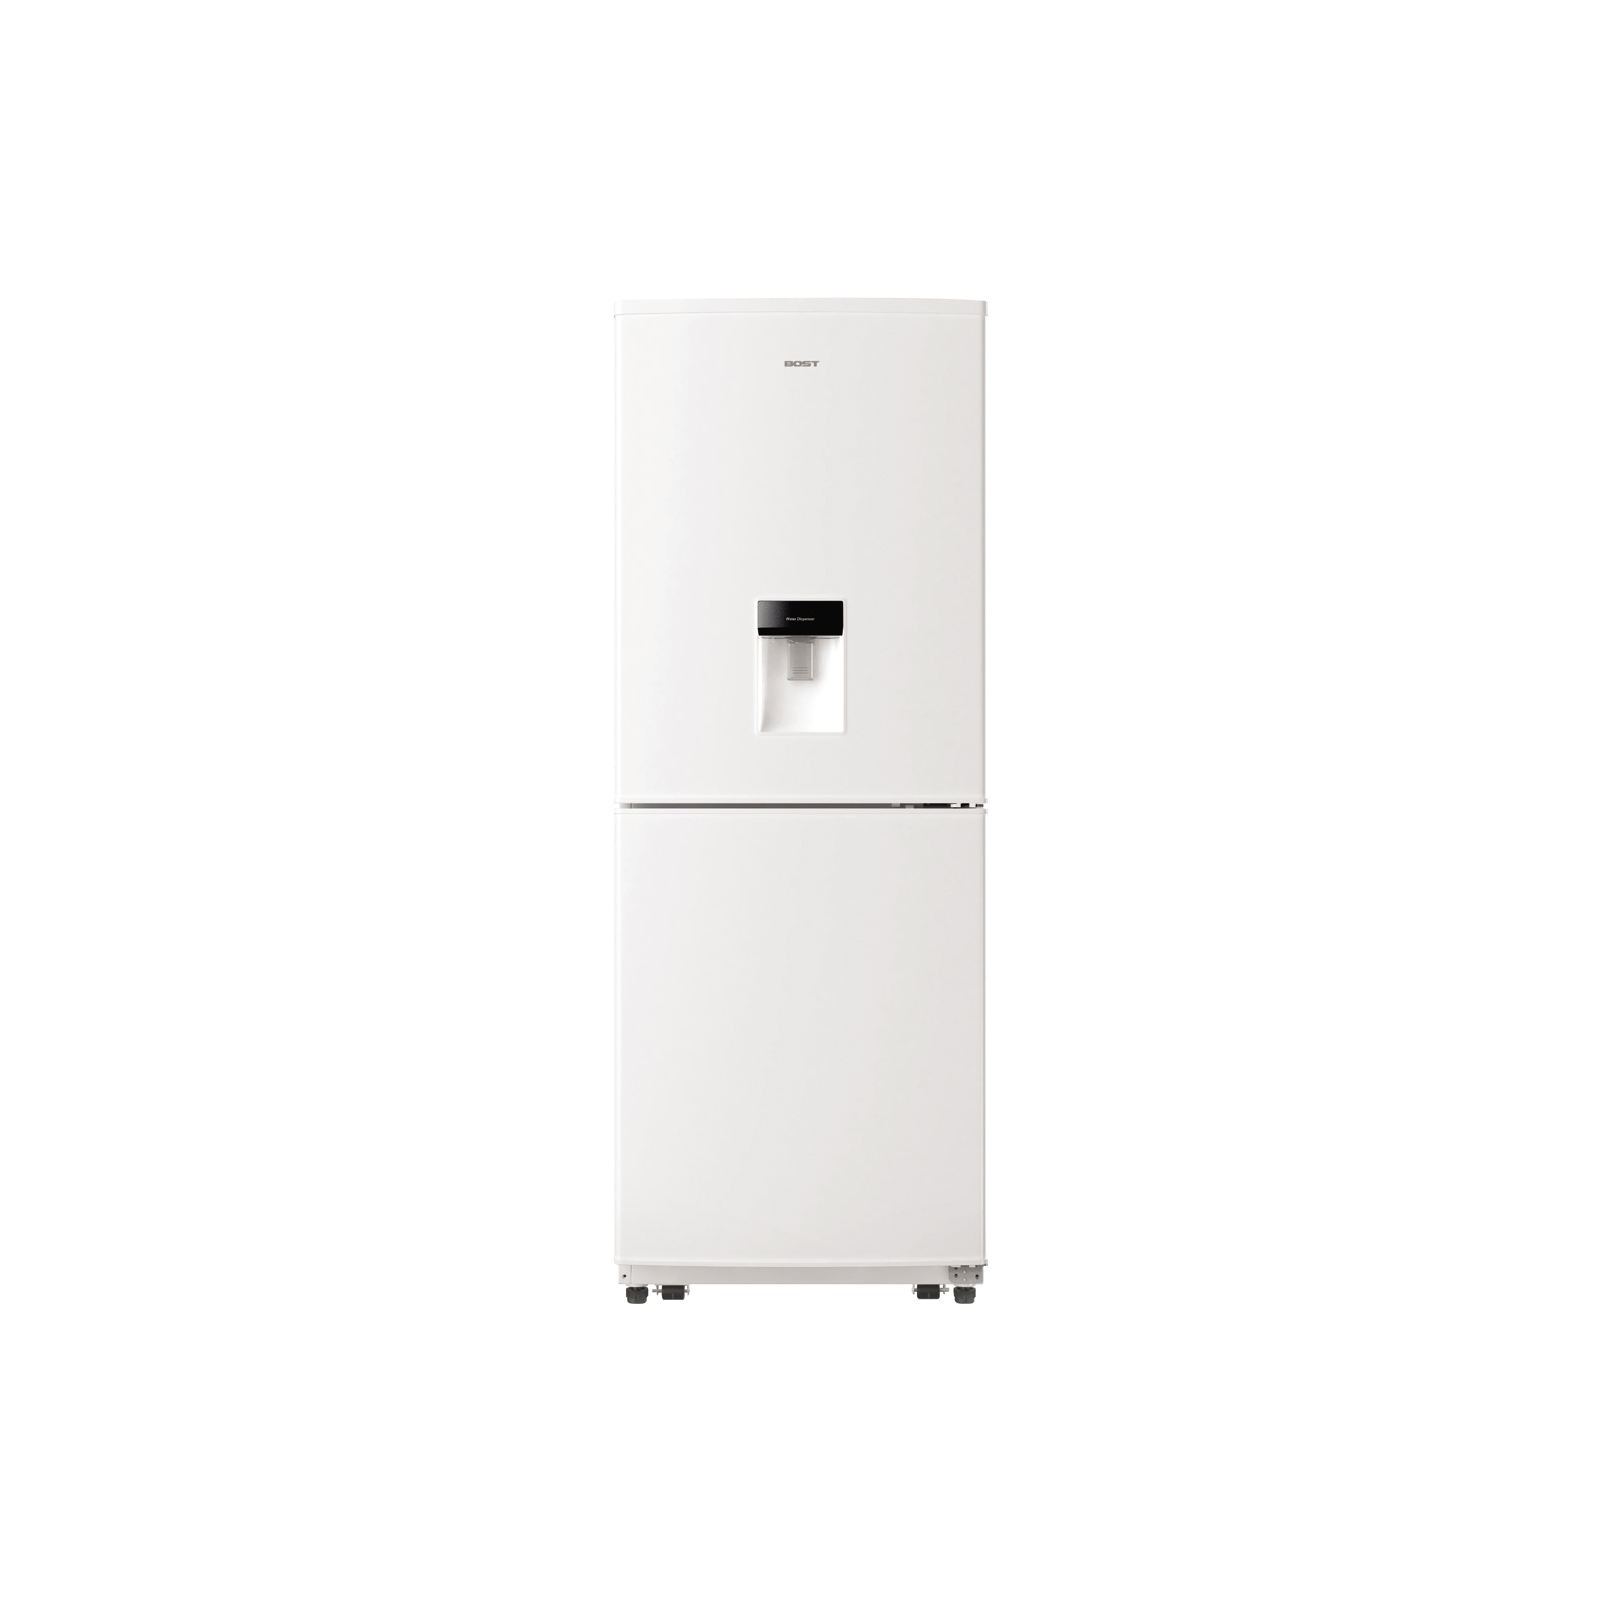 Refrigerator-freezer model BRB240